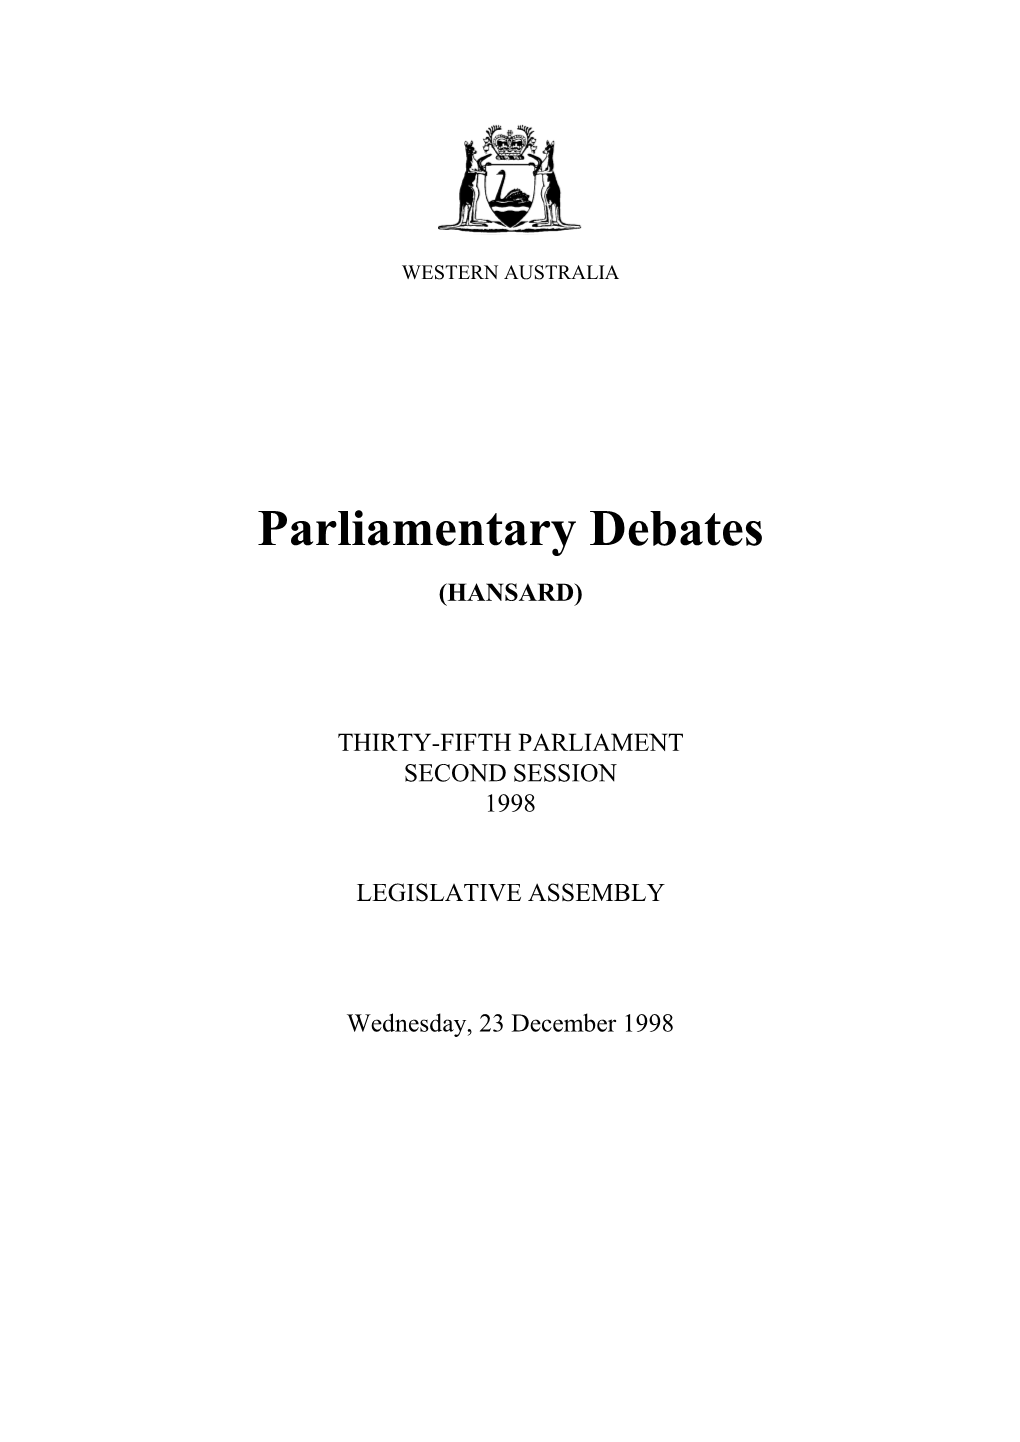 Assembly Wednesday, 23 December 1998